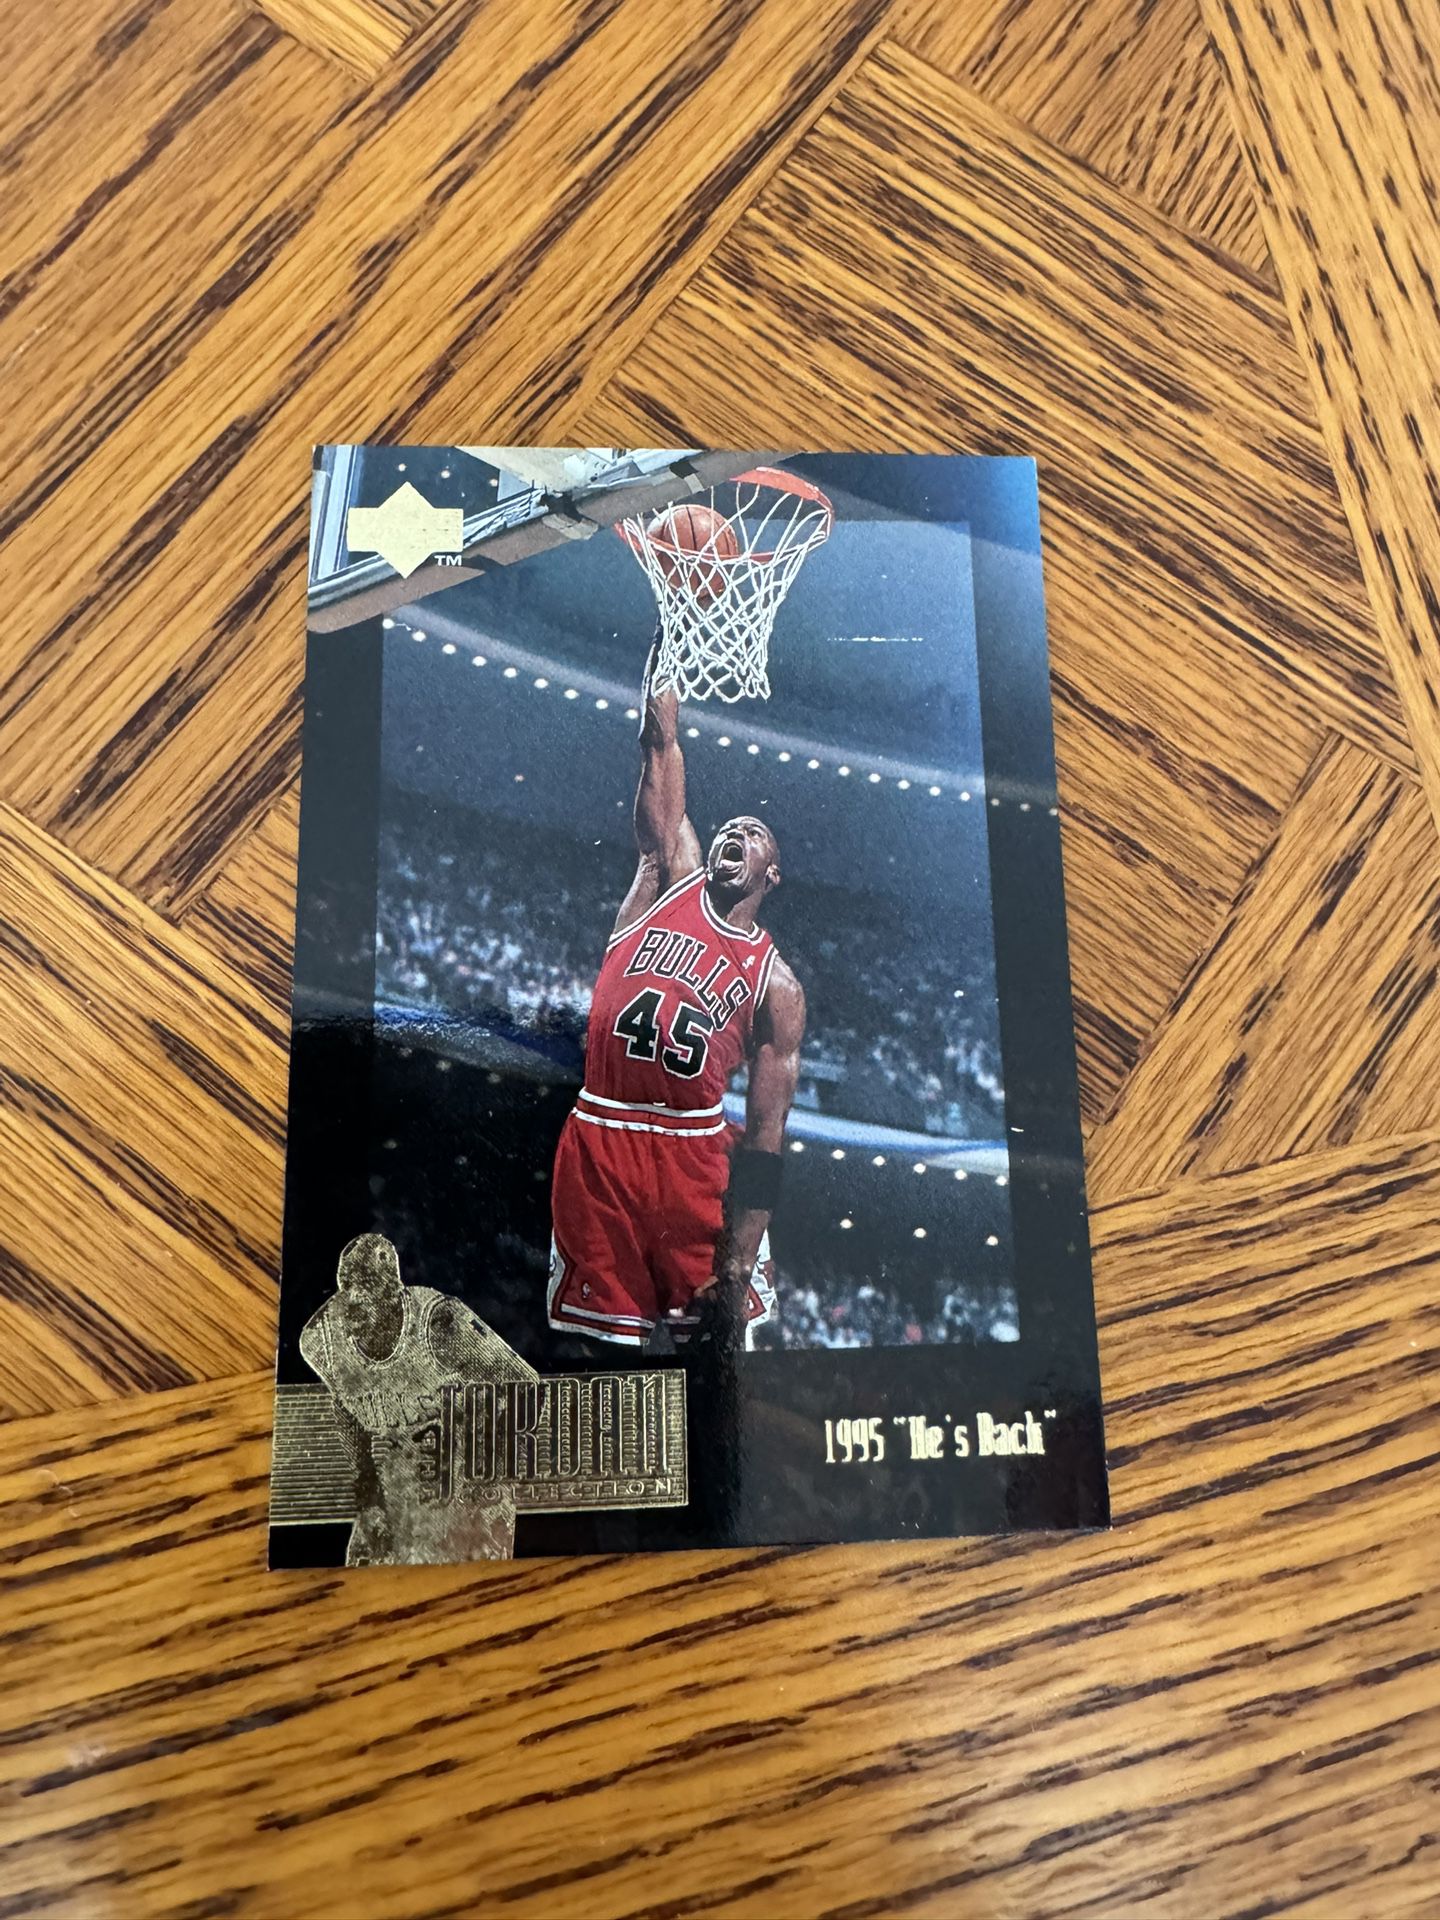 Michael Jordan Variety 1985 through 1999